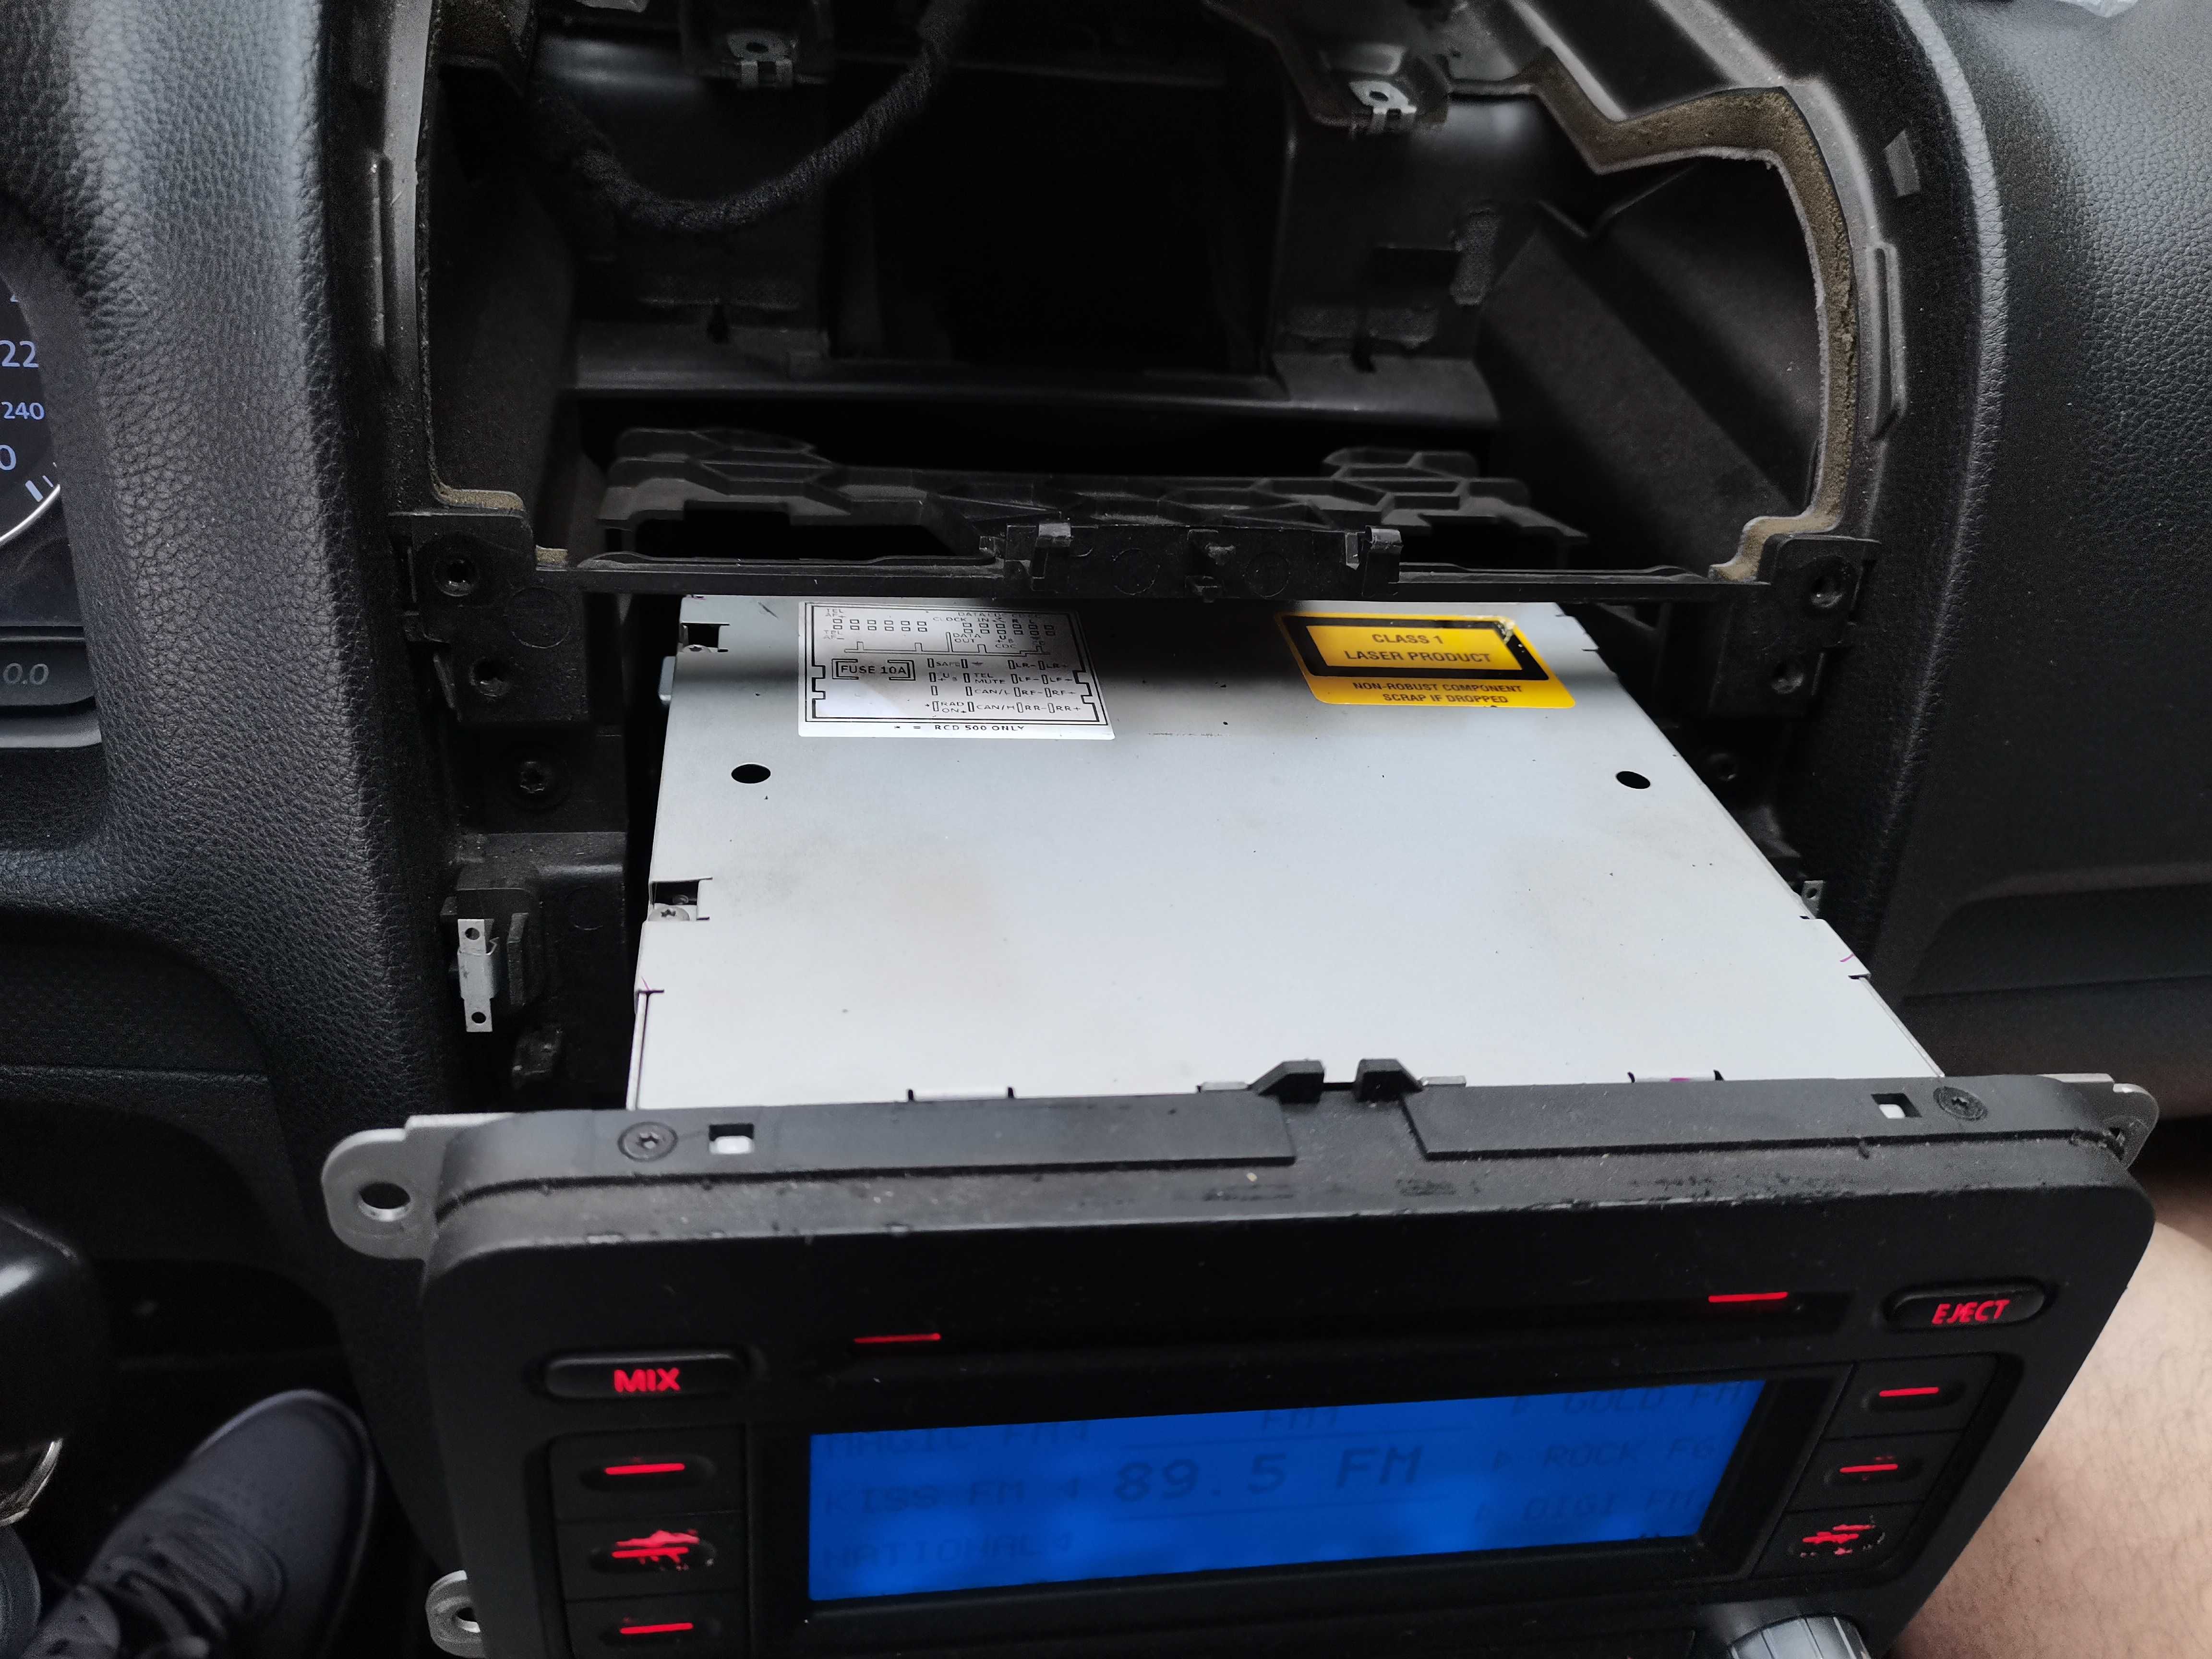 Radio CD-player RCD300 Volkswagen Golf